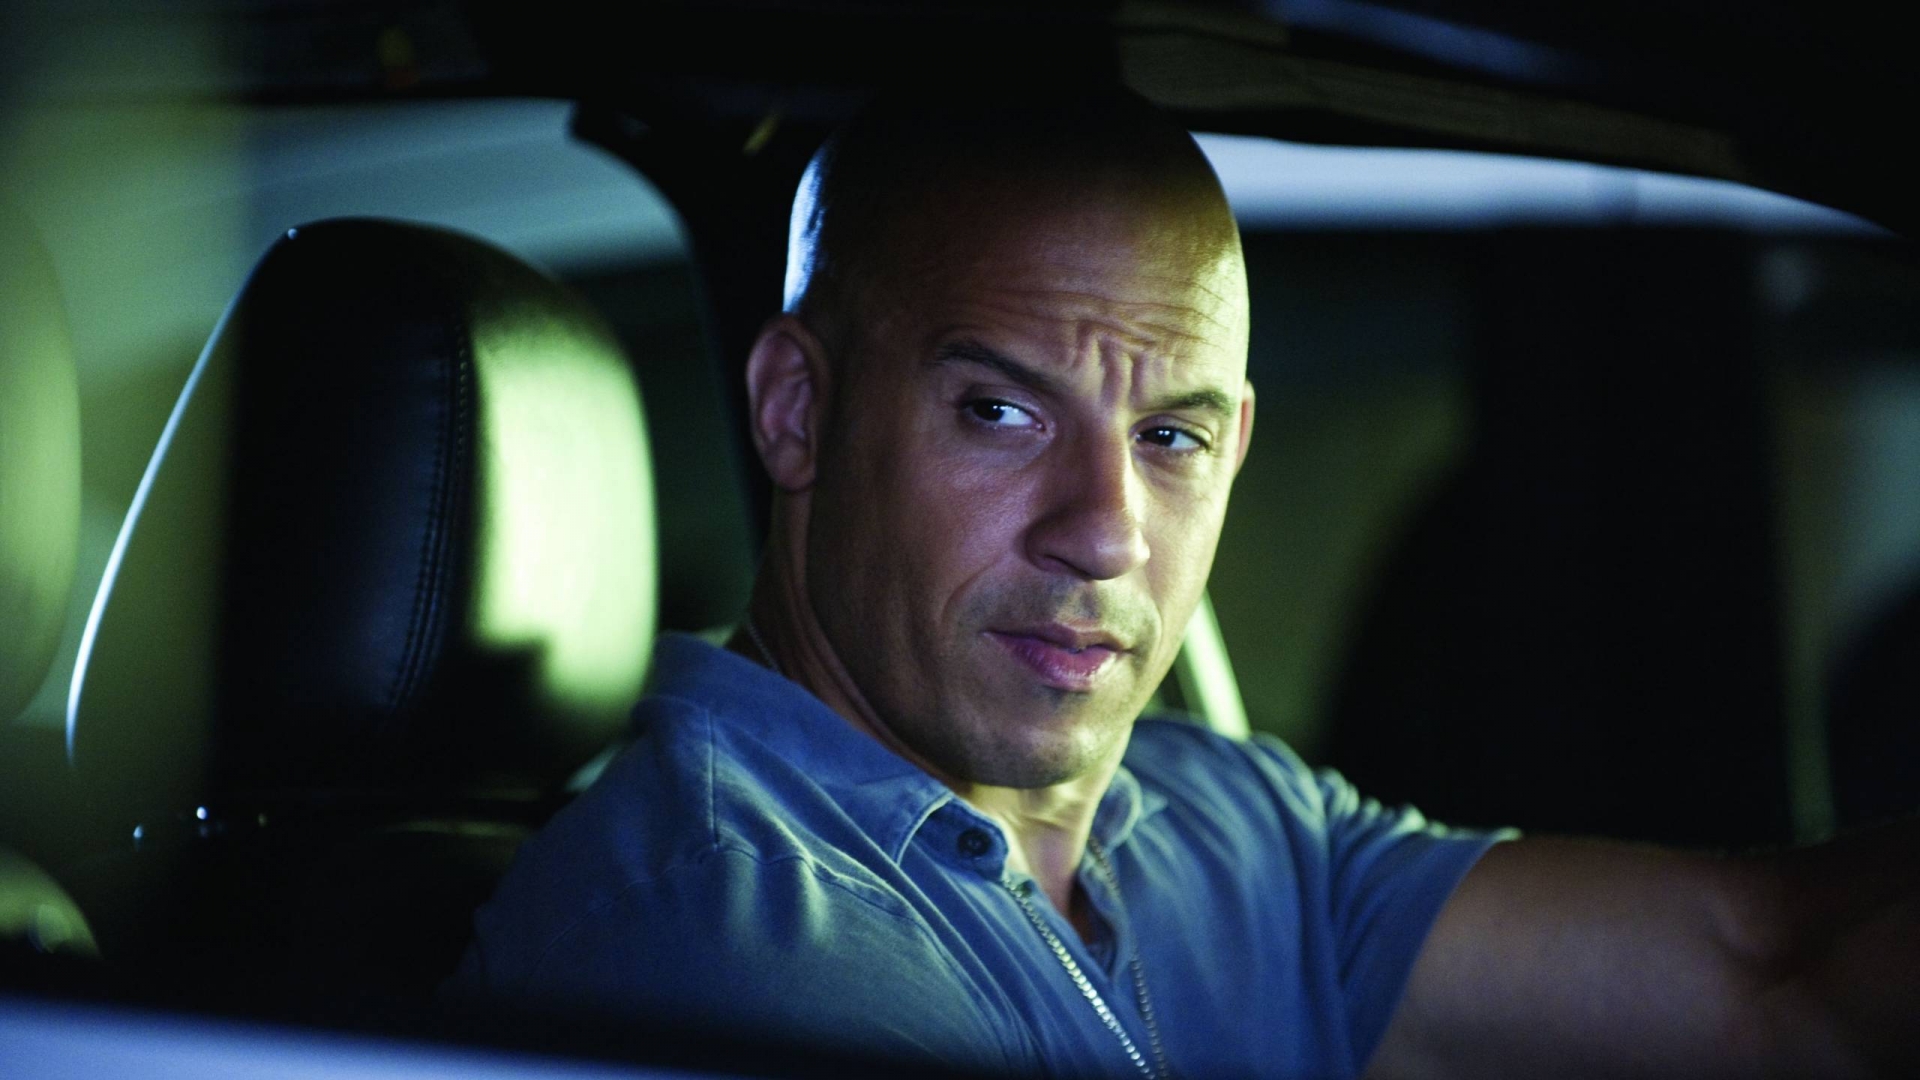 Vin Diesel in Car for 1920 x 1080 HDTV 1080p resolution